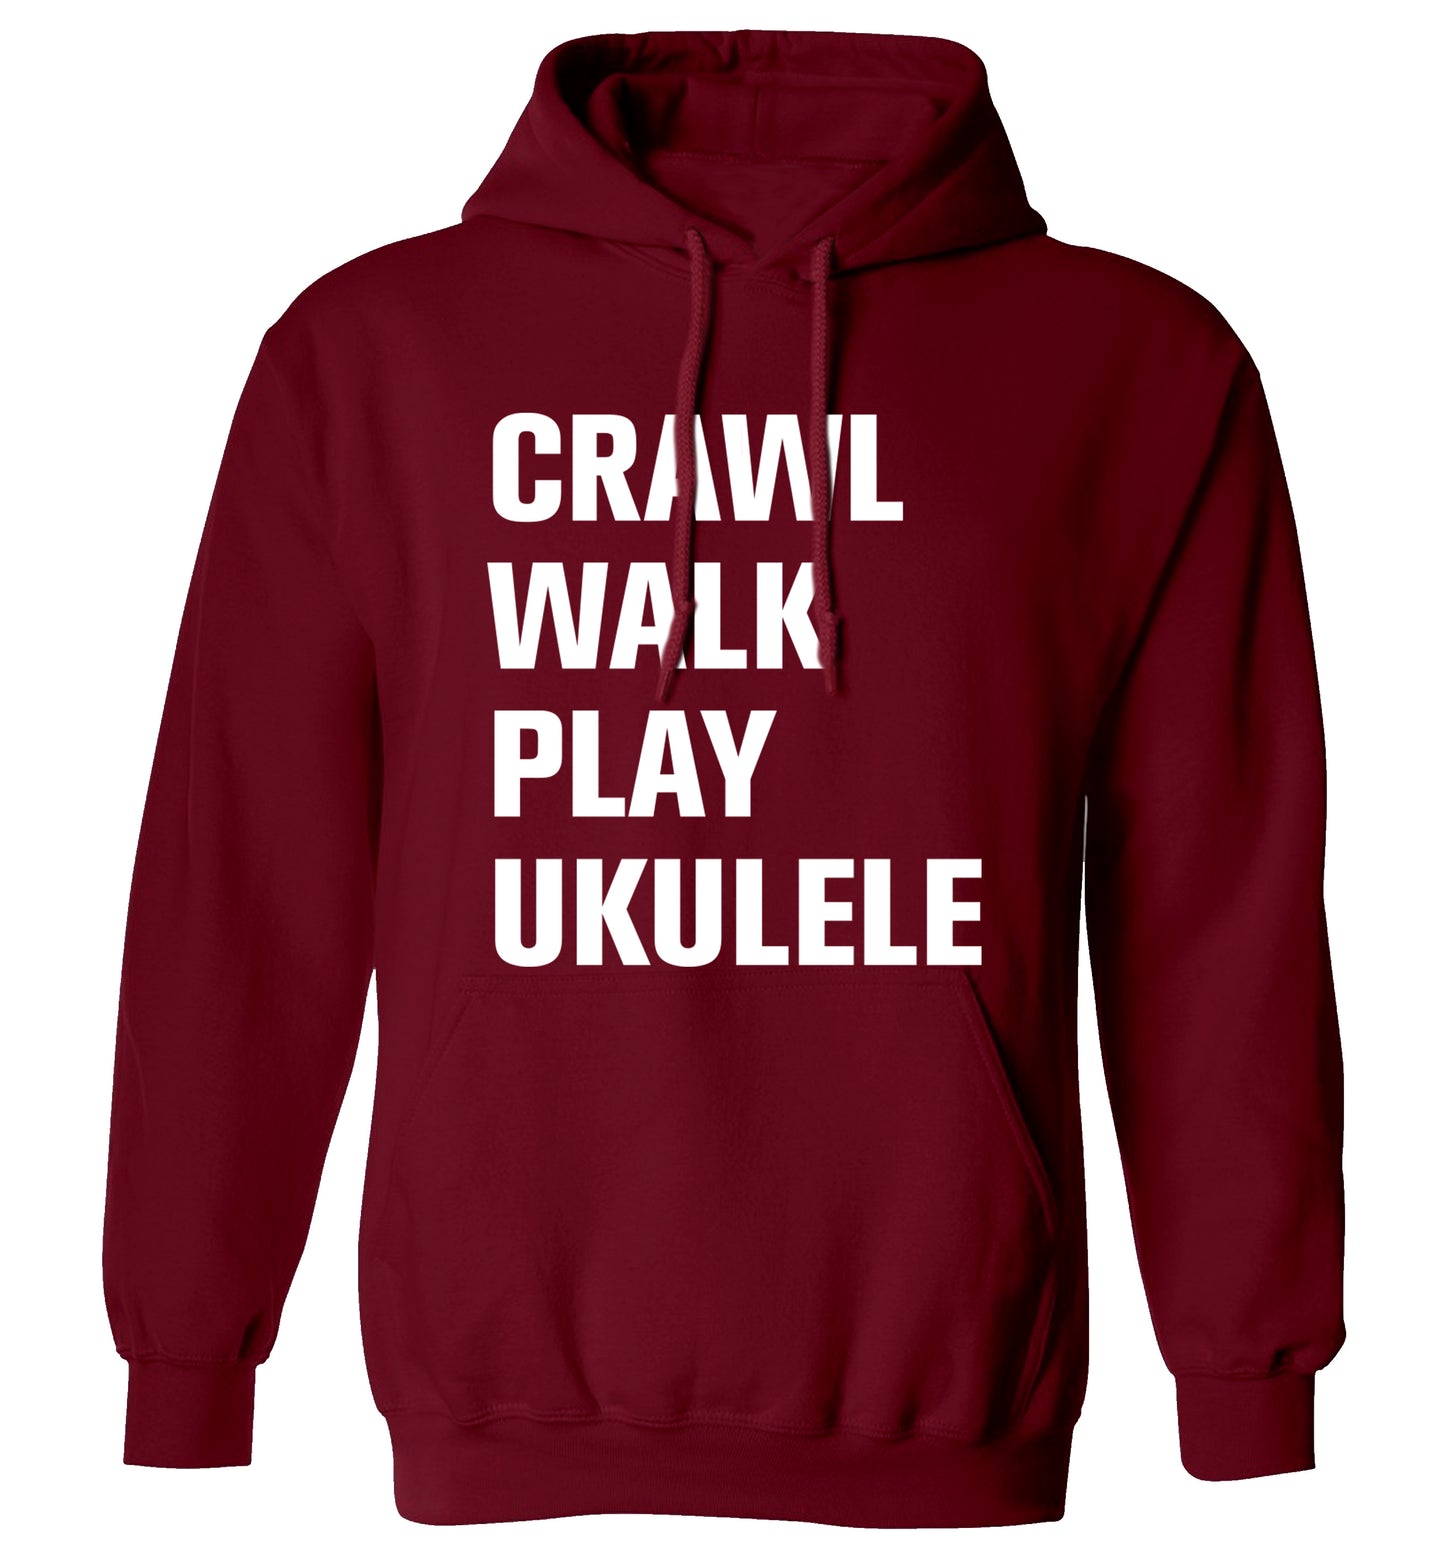 Crawl walk play ukulele adults unisex maroon hoodie 2XL